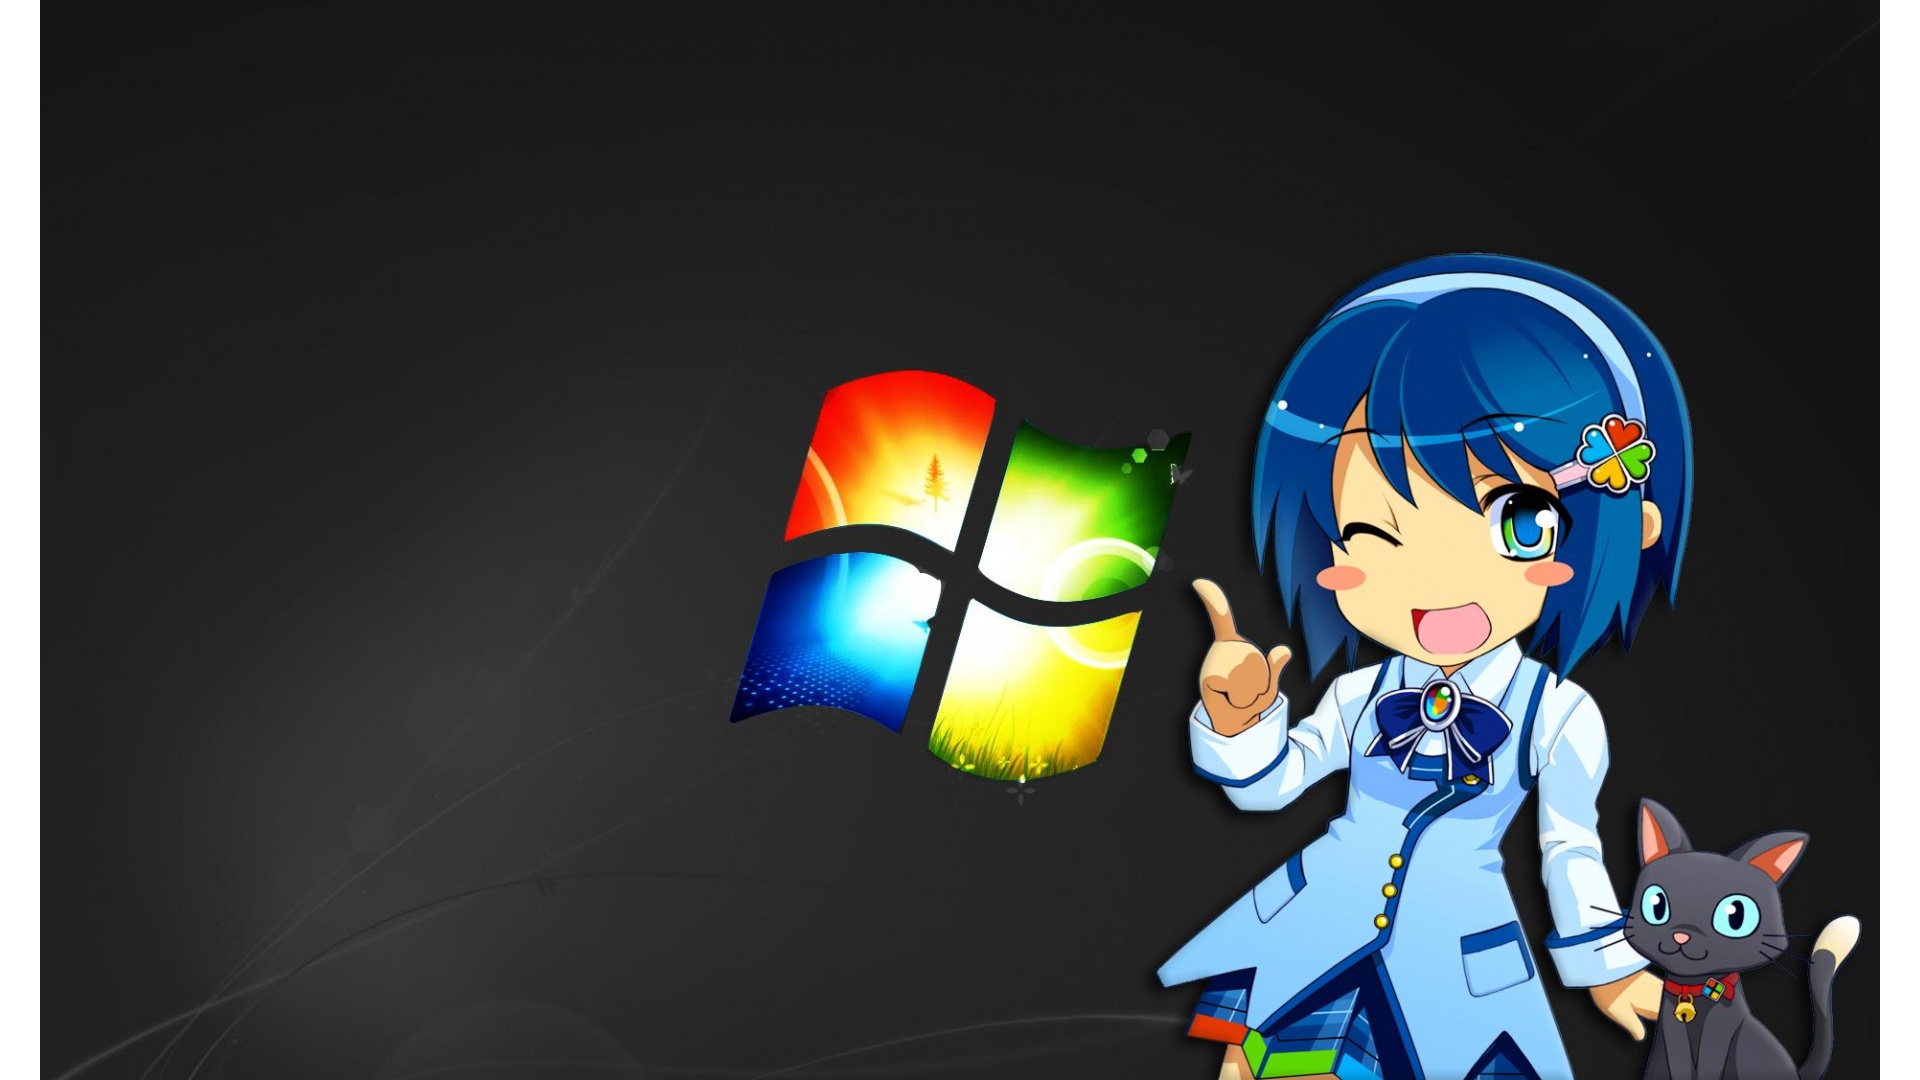 49+] Anime Wallpaper for Windows 8 - WallpaperSafari